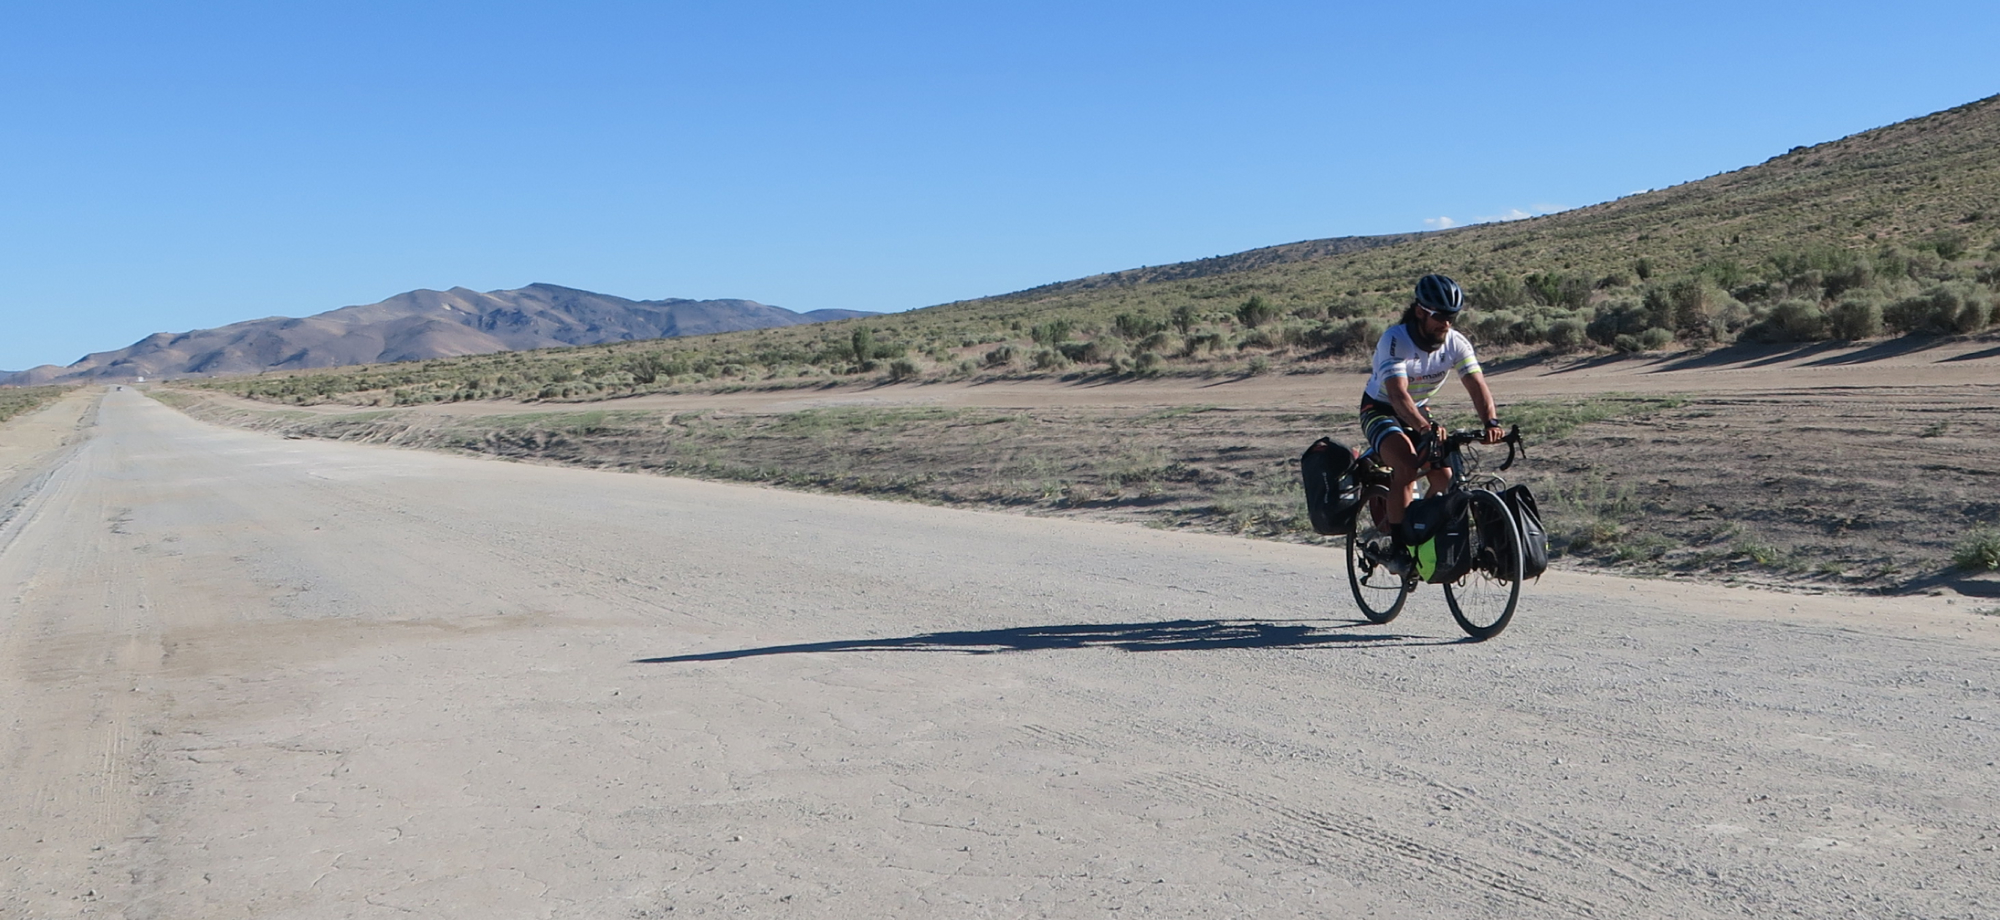 COVERING NEW GROUND - Man biking on gravel road